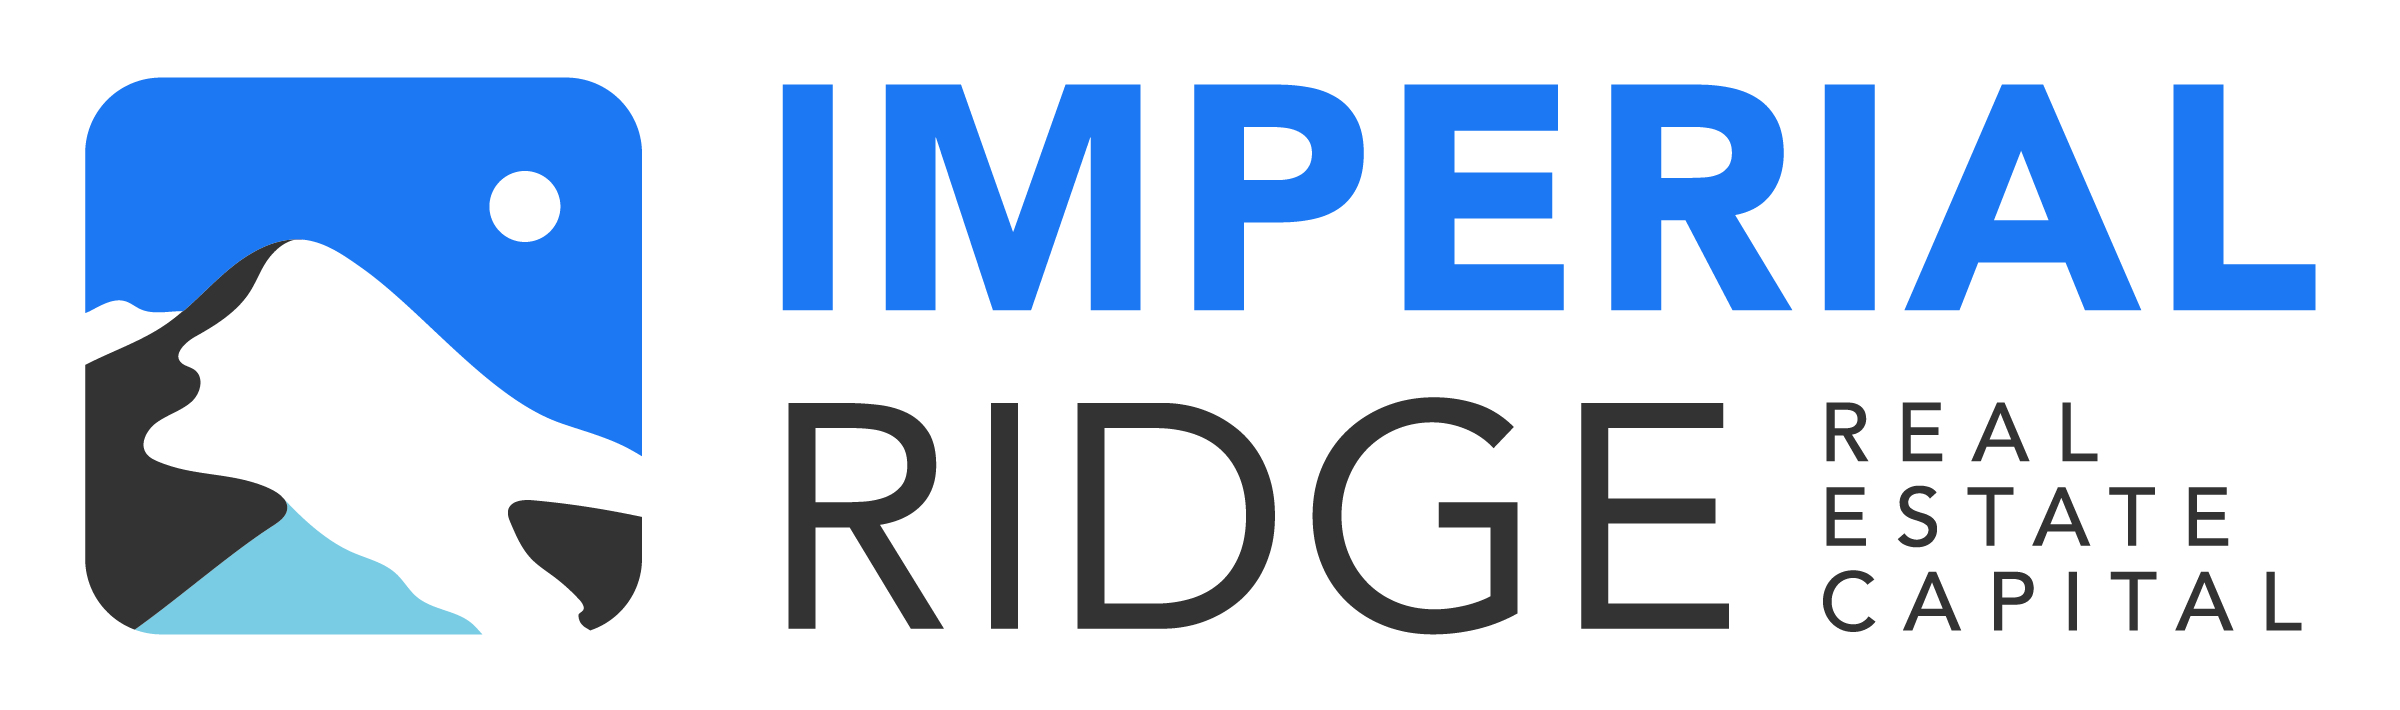 Imperial Ridge Real Estate Capital logo